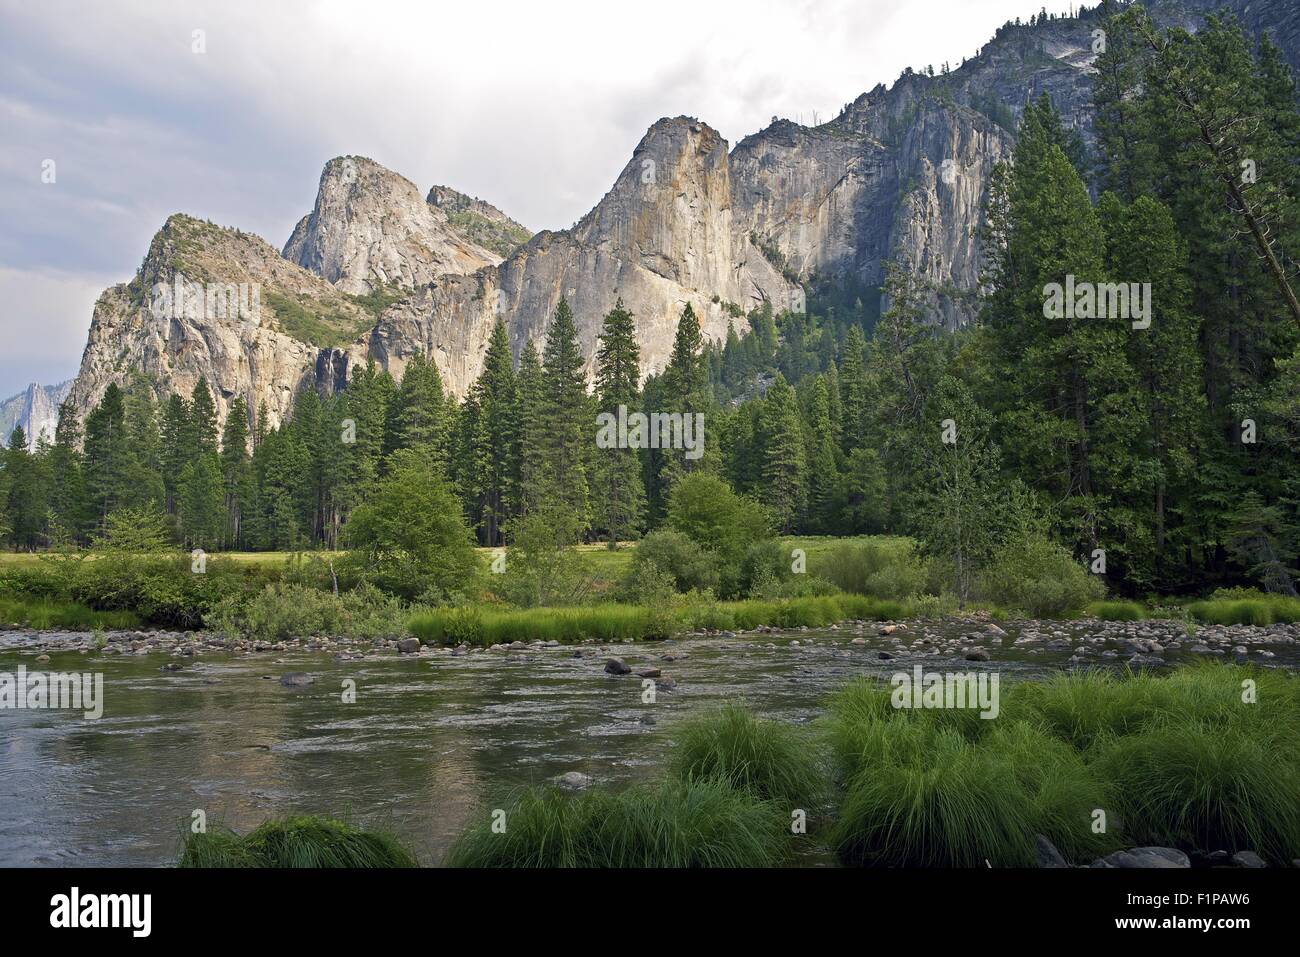 Yosemite Landscape. Yosemite National Park, California, USA.  Merced River. Nature Photo Collection. Stock Photo